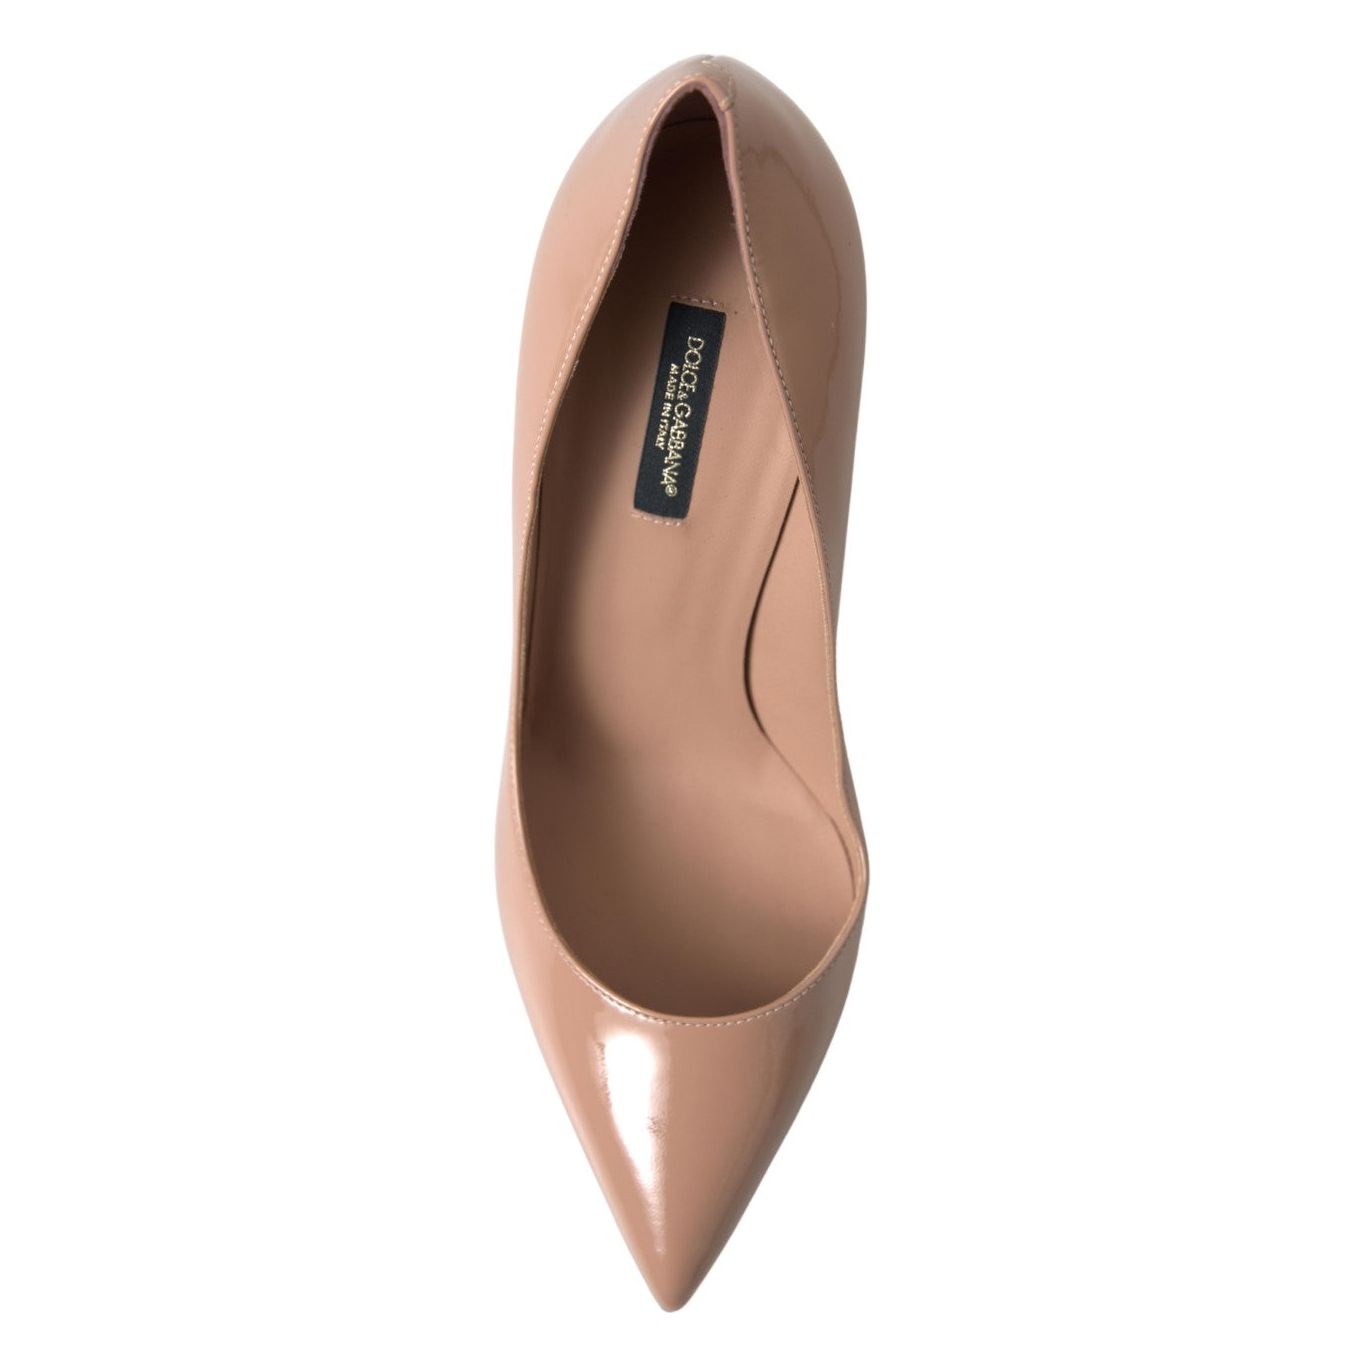 Dolce & Gabbana Elegant Beige Patent Leather Pumps beige-leather-pumps-patent-heels-shoes 465A9979-Medium-3b013cff-486.jpg